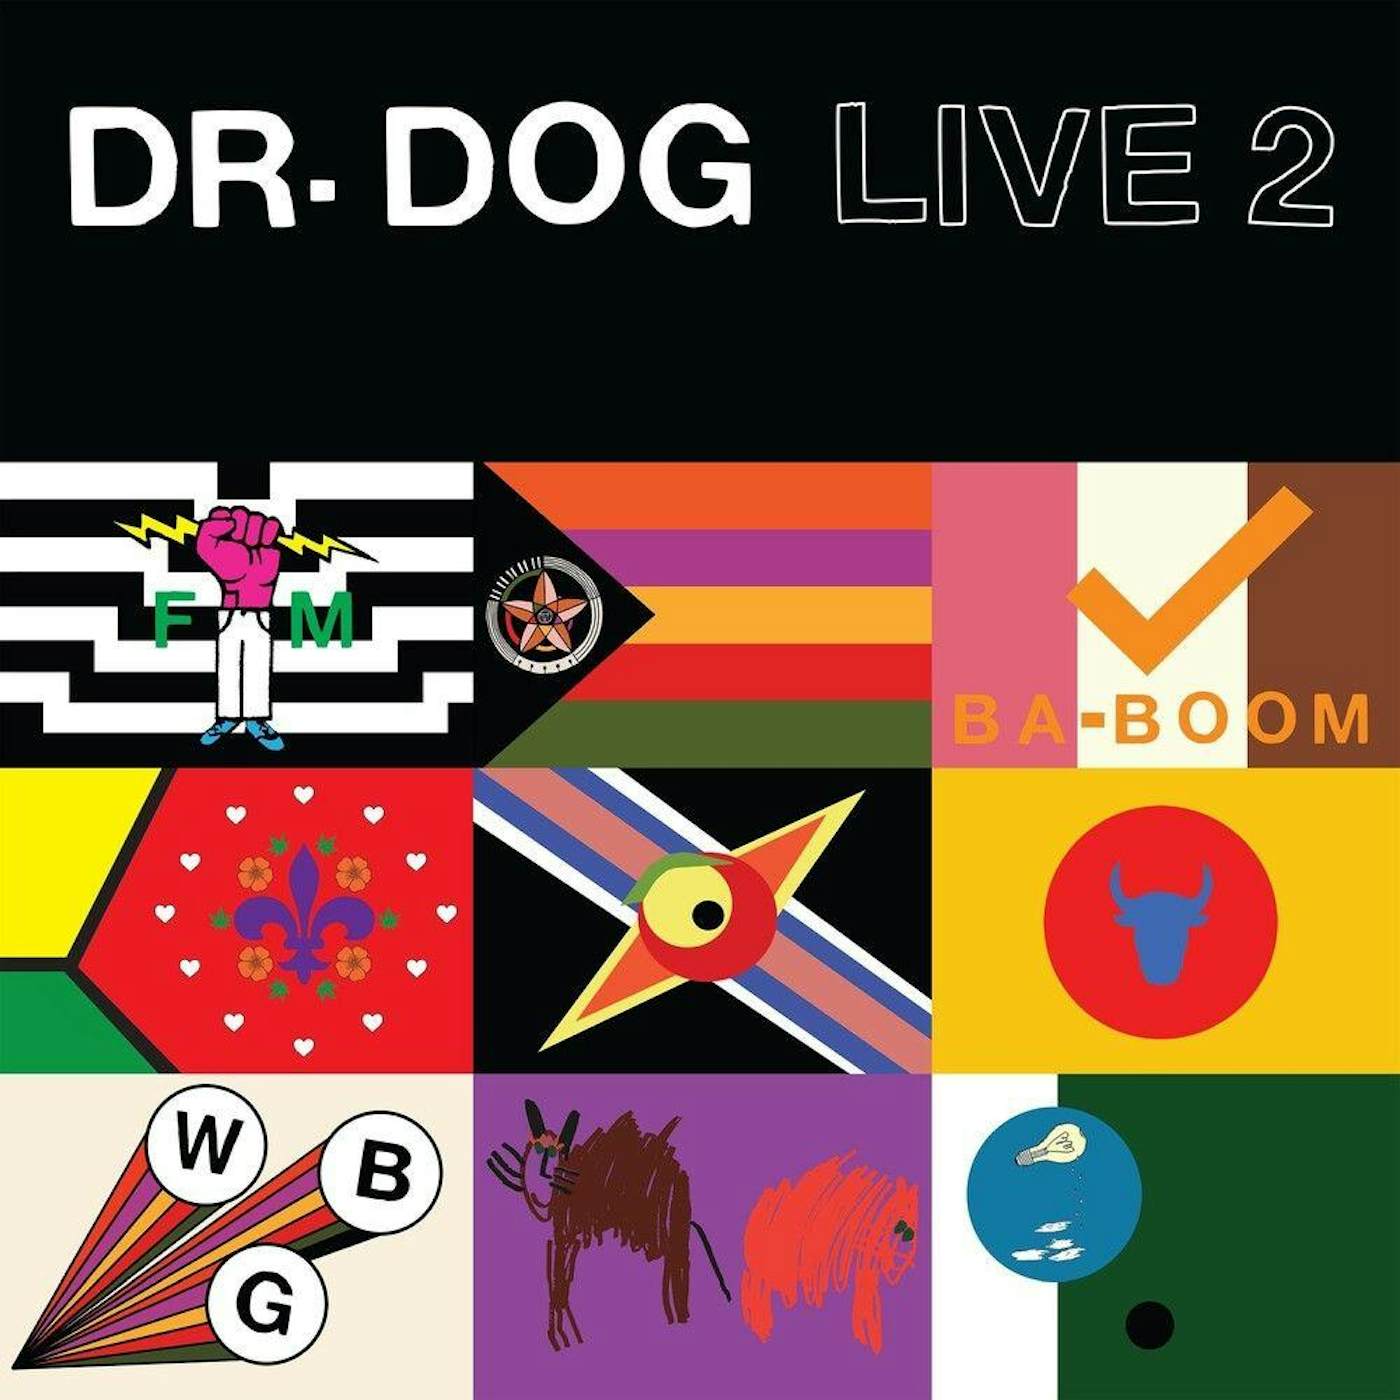 Dr. Dog Live 2 Vinyl Record